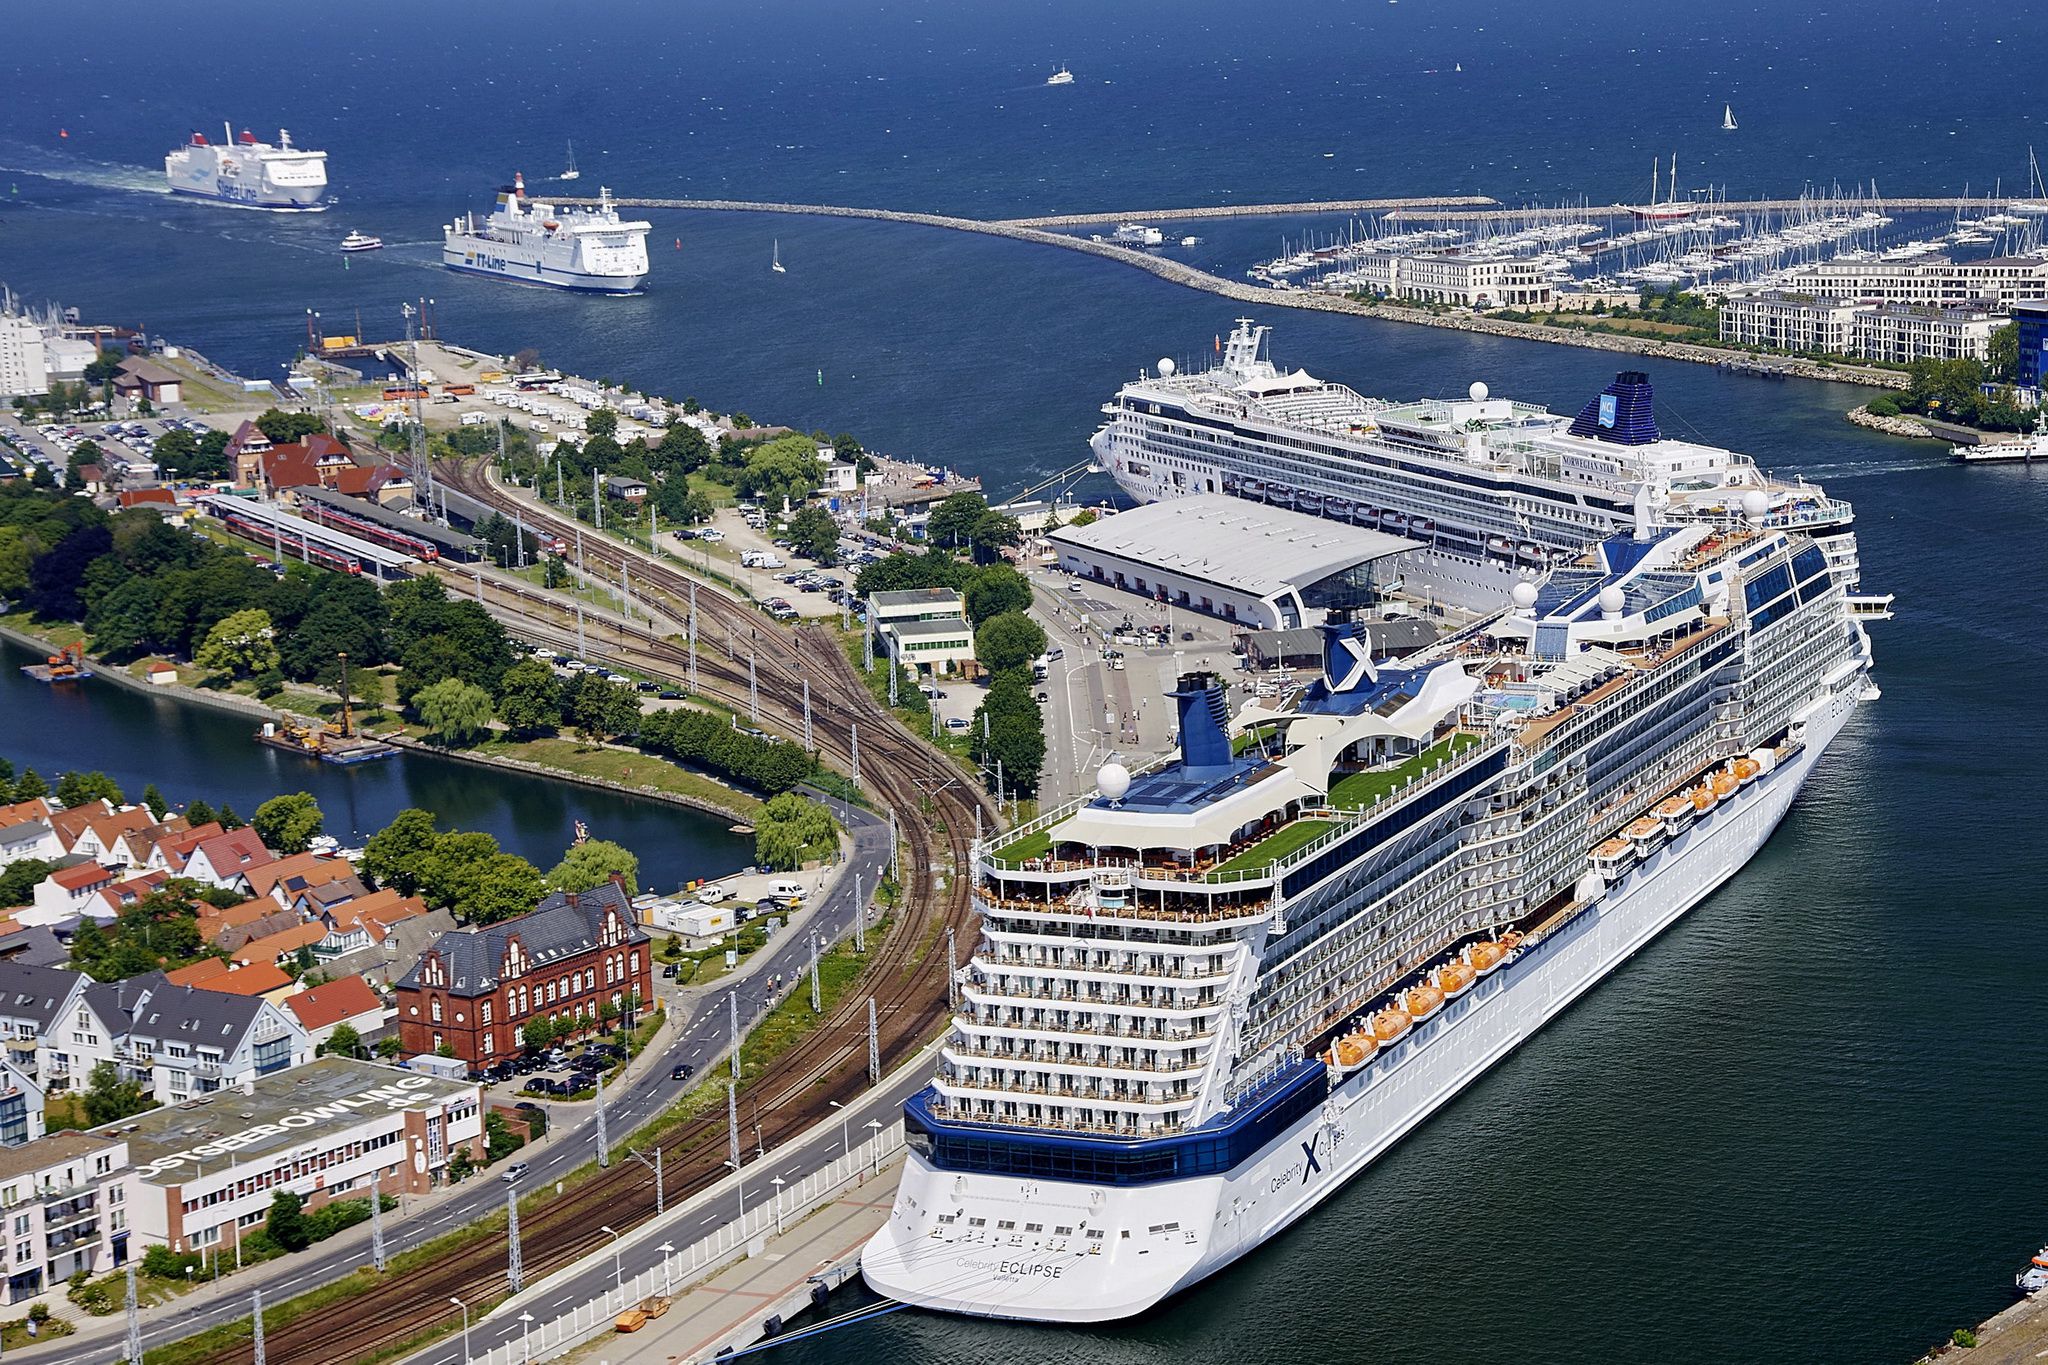 Southampton Cruise port